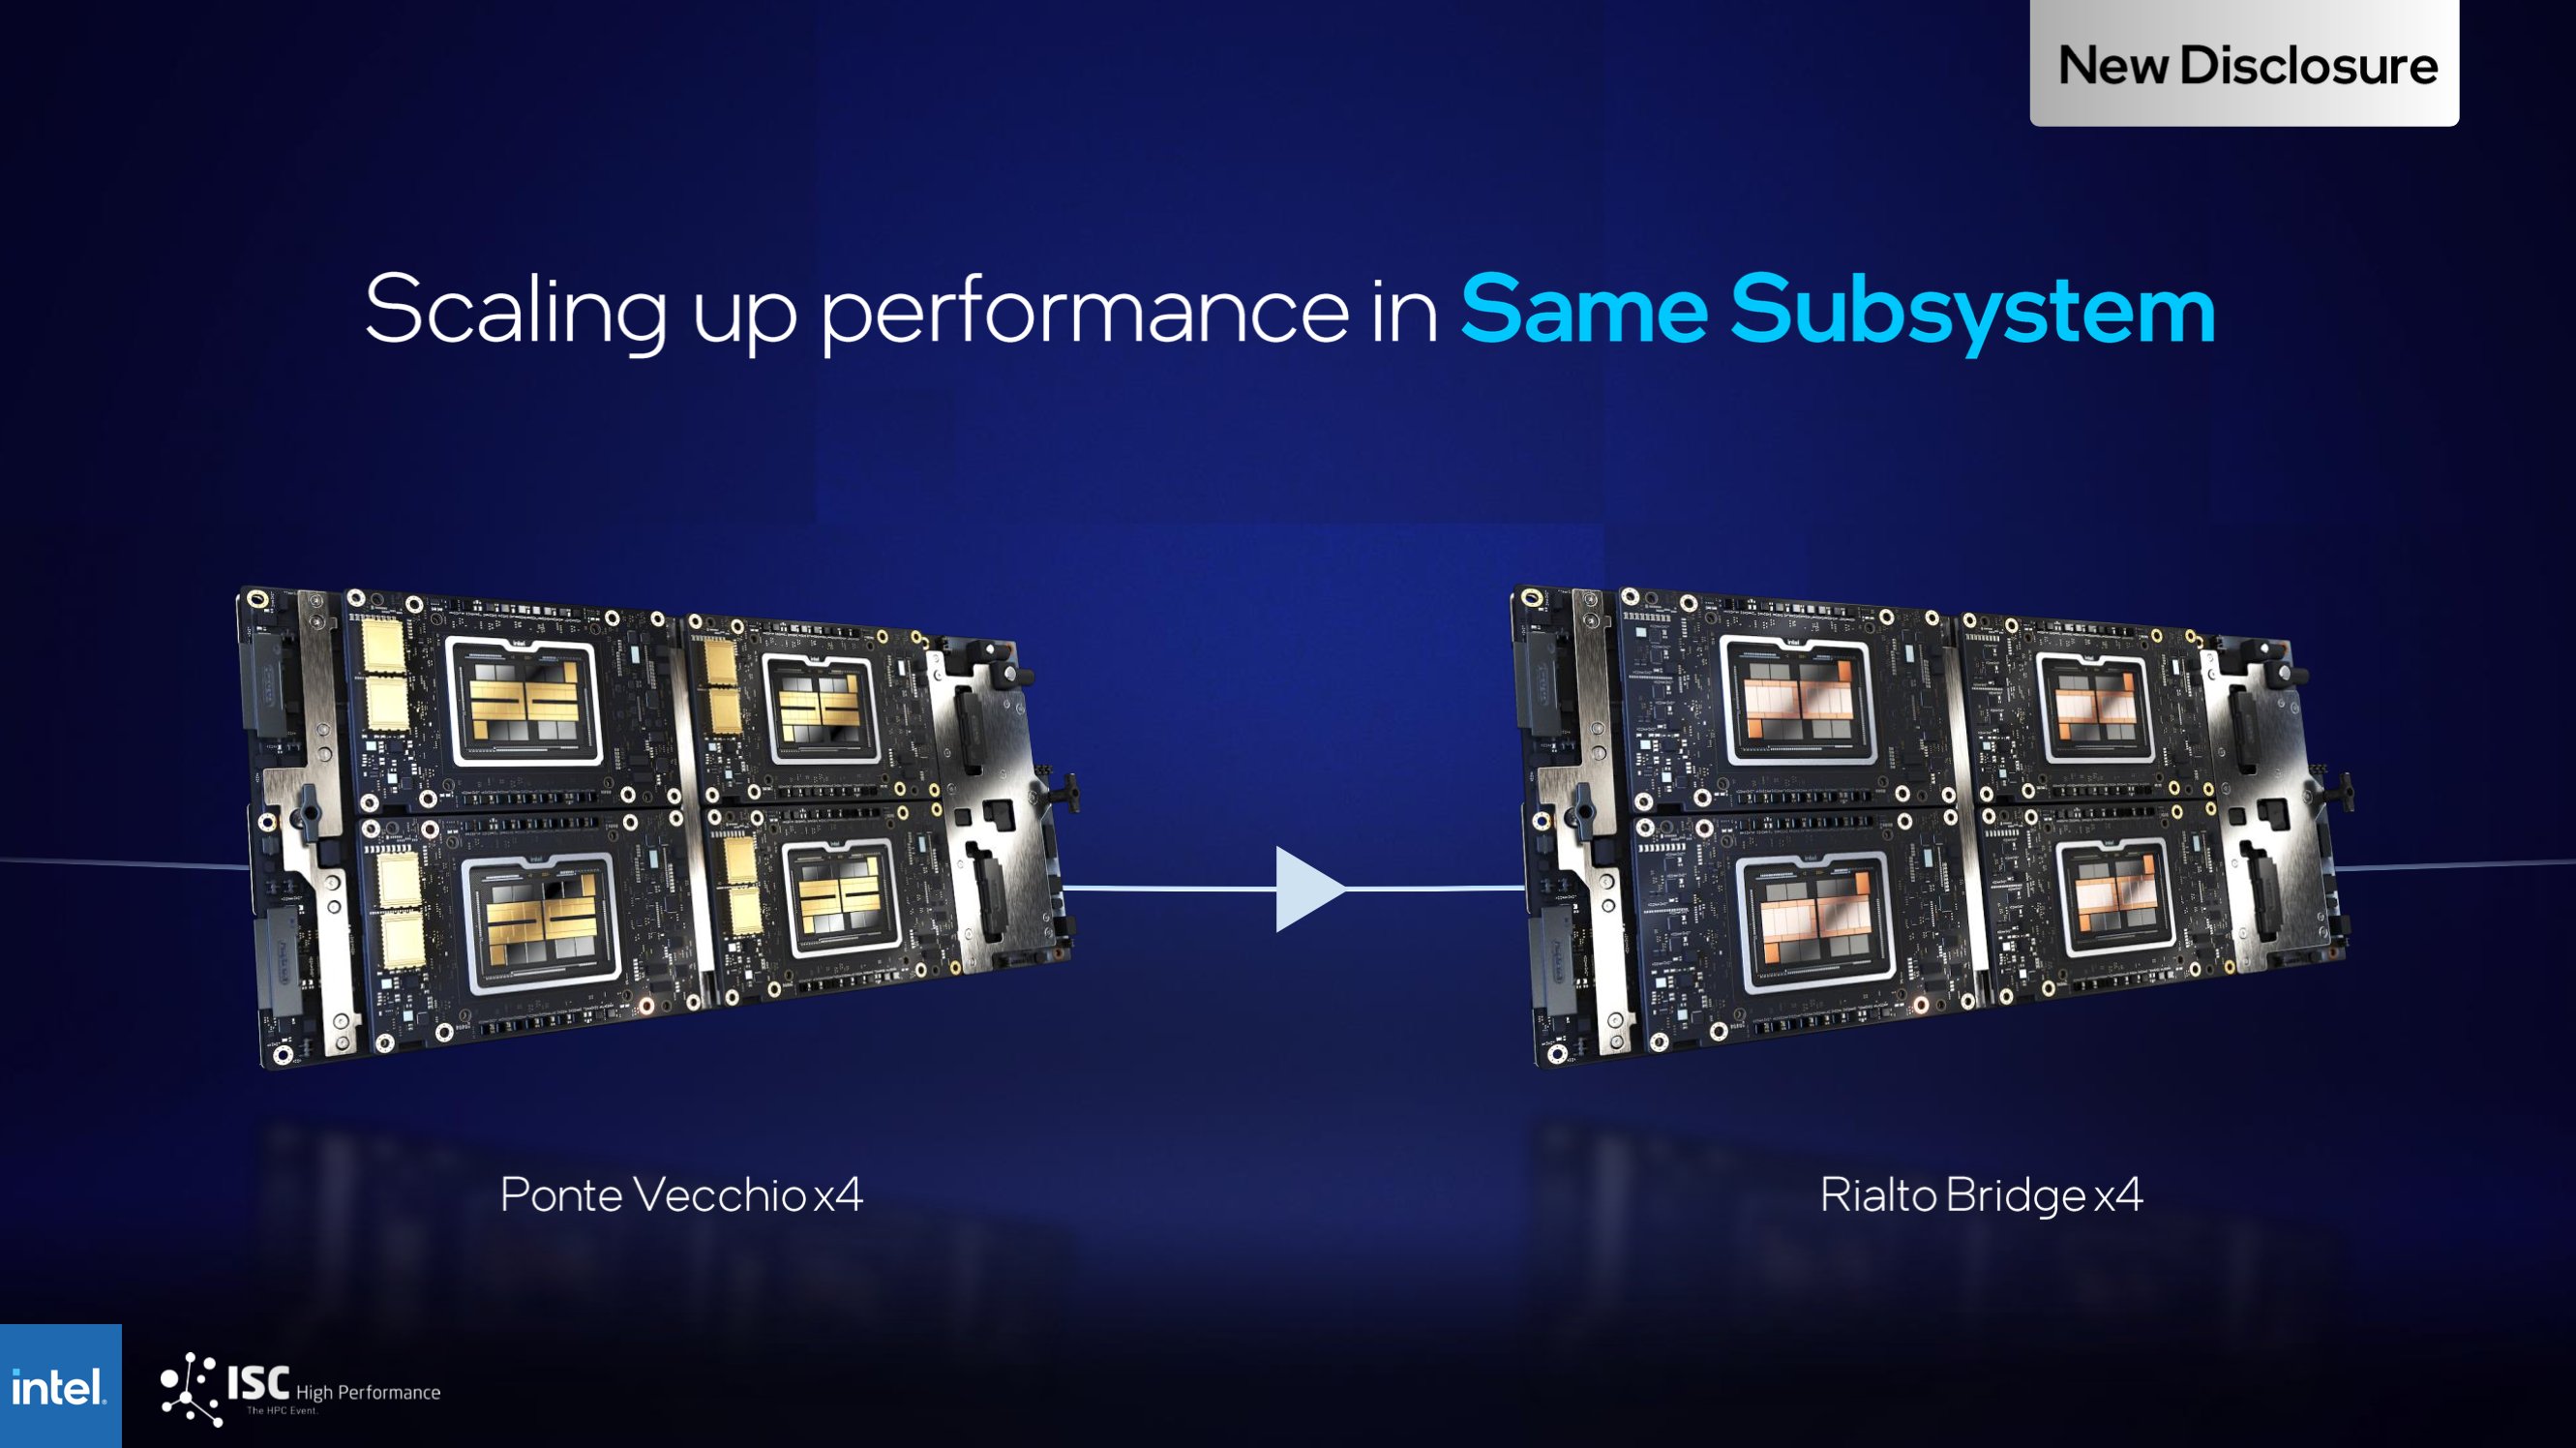 Intel introduces 800W Rialto Bridge next-gen data center GPU with up to 160  Xe-Cores 